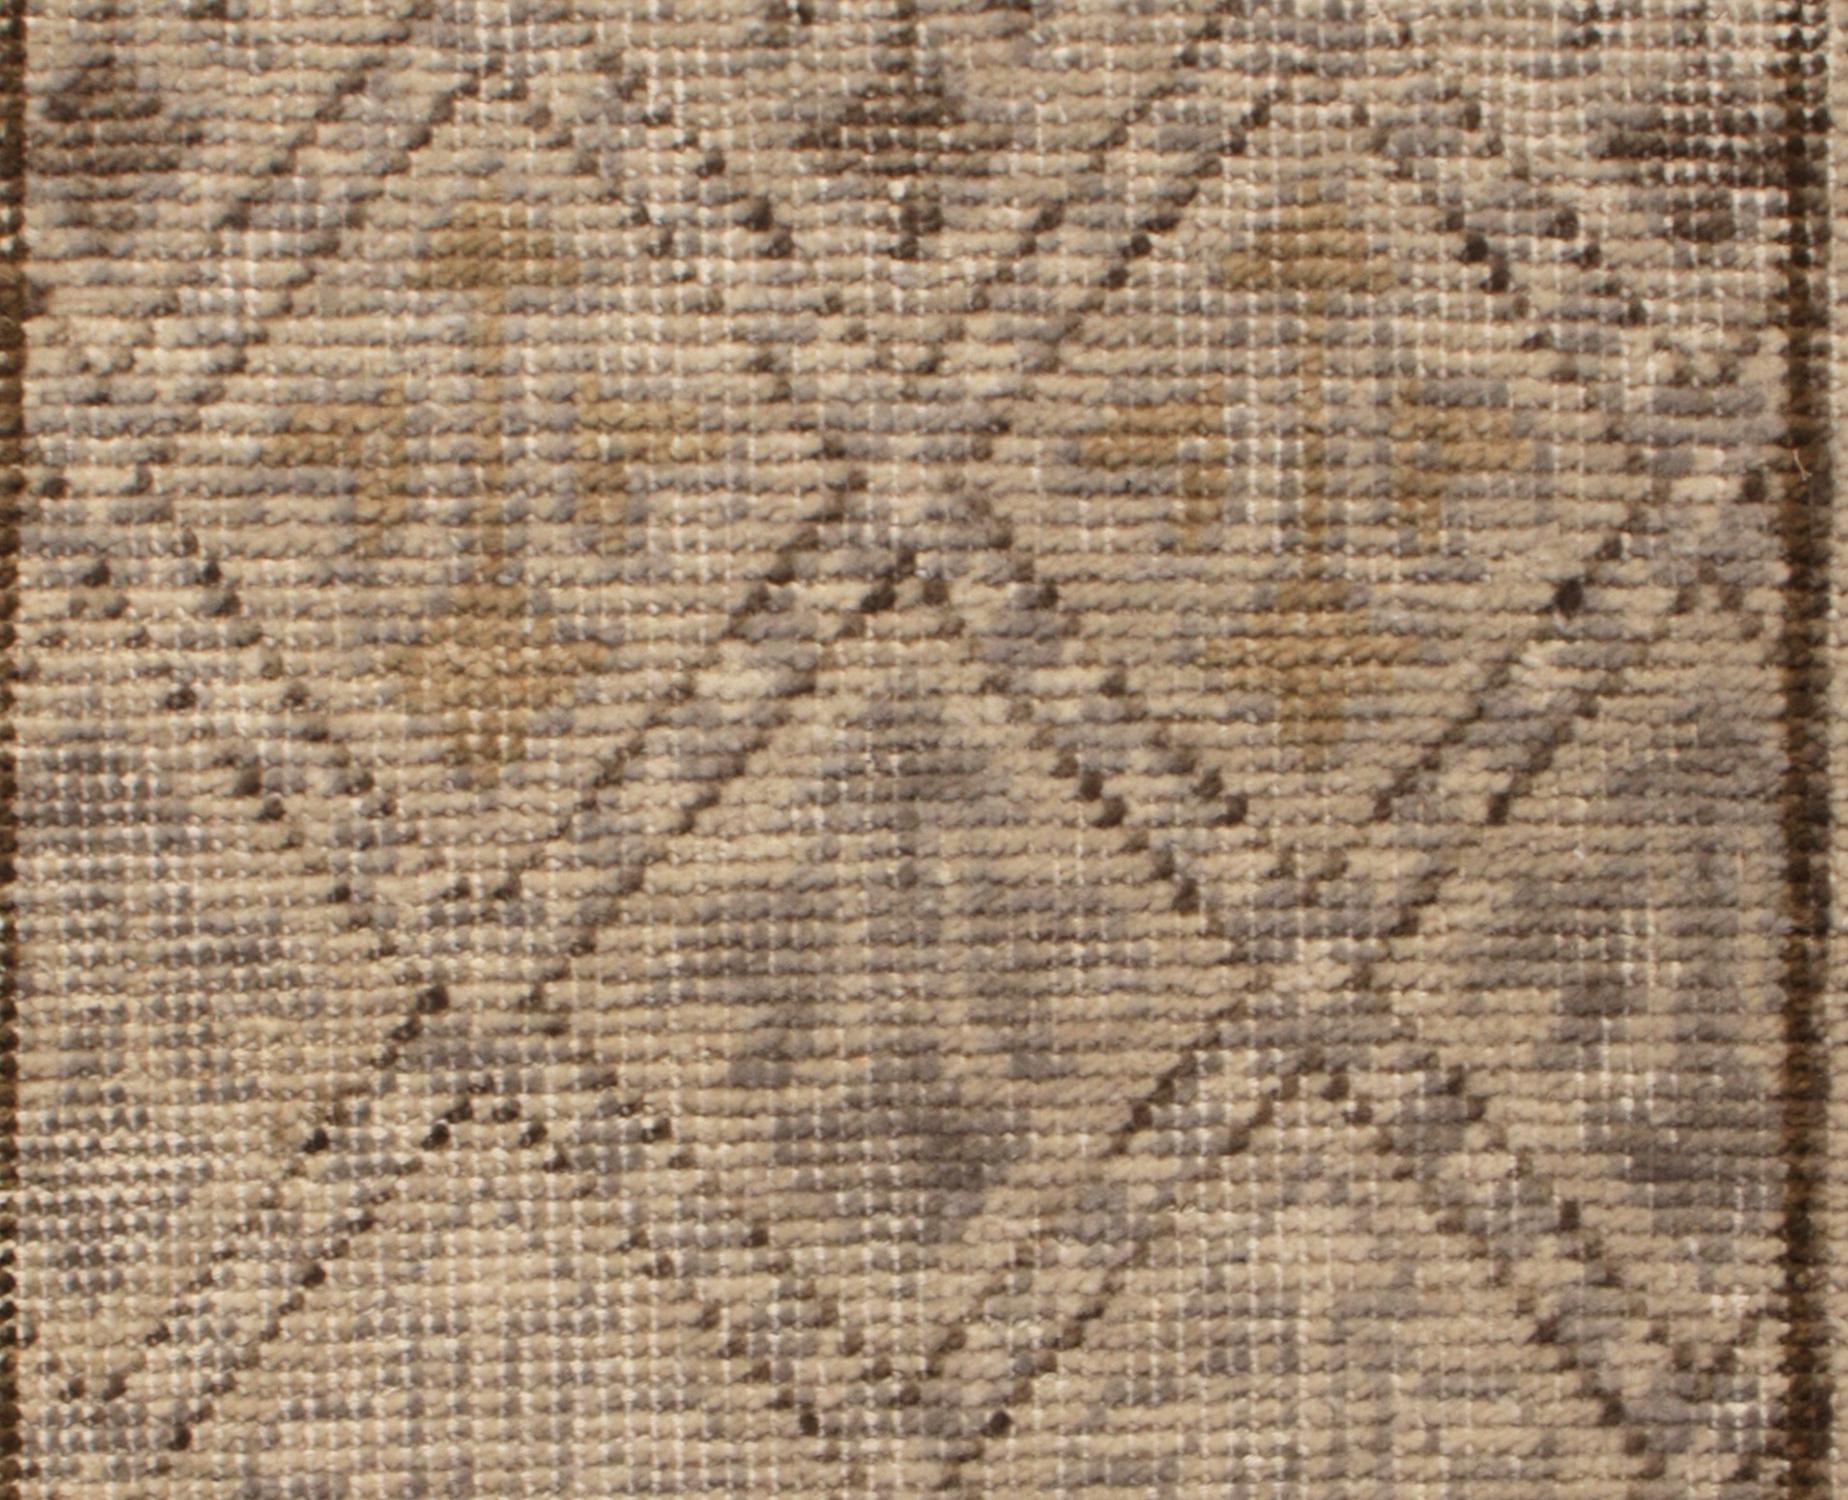 Indian Rug & Kilim’s Distressed Gift Sized Rug, Beige-Brown Geometric Design